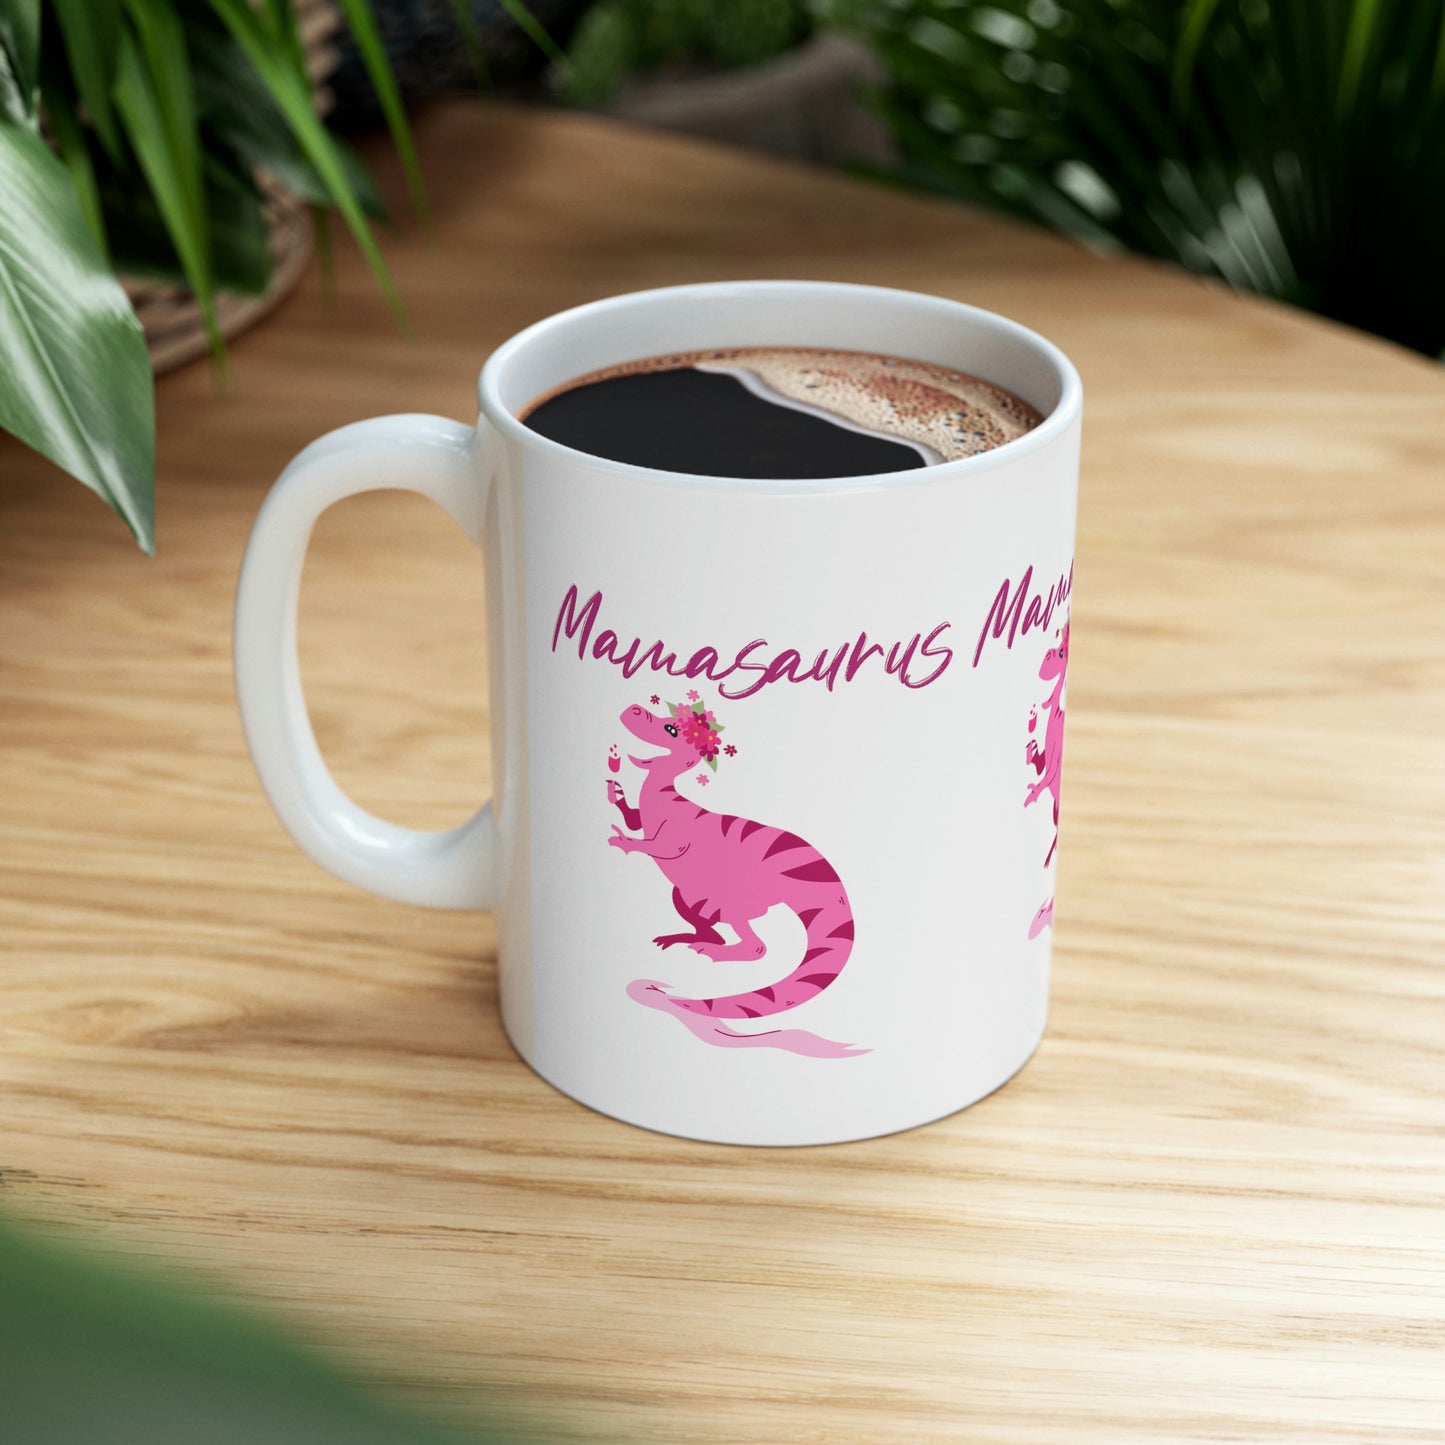 Mamasaurus Ceramic Mug: White; 11 oz.; Cute graphics